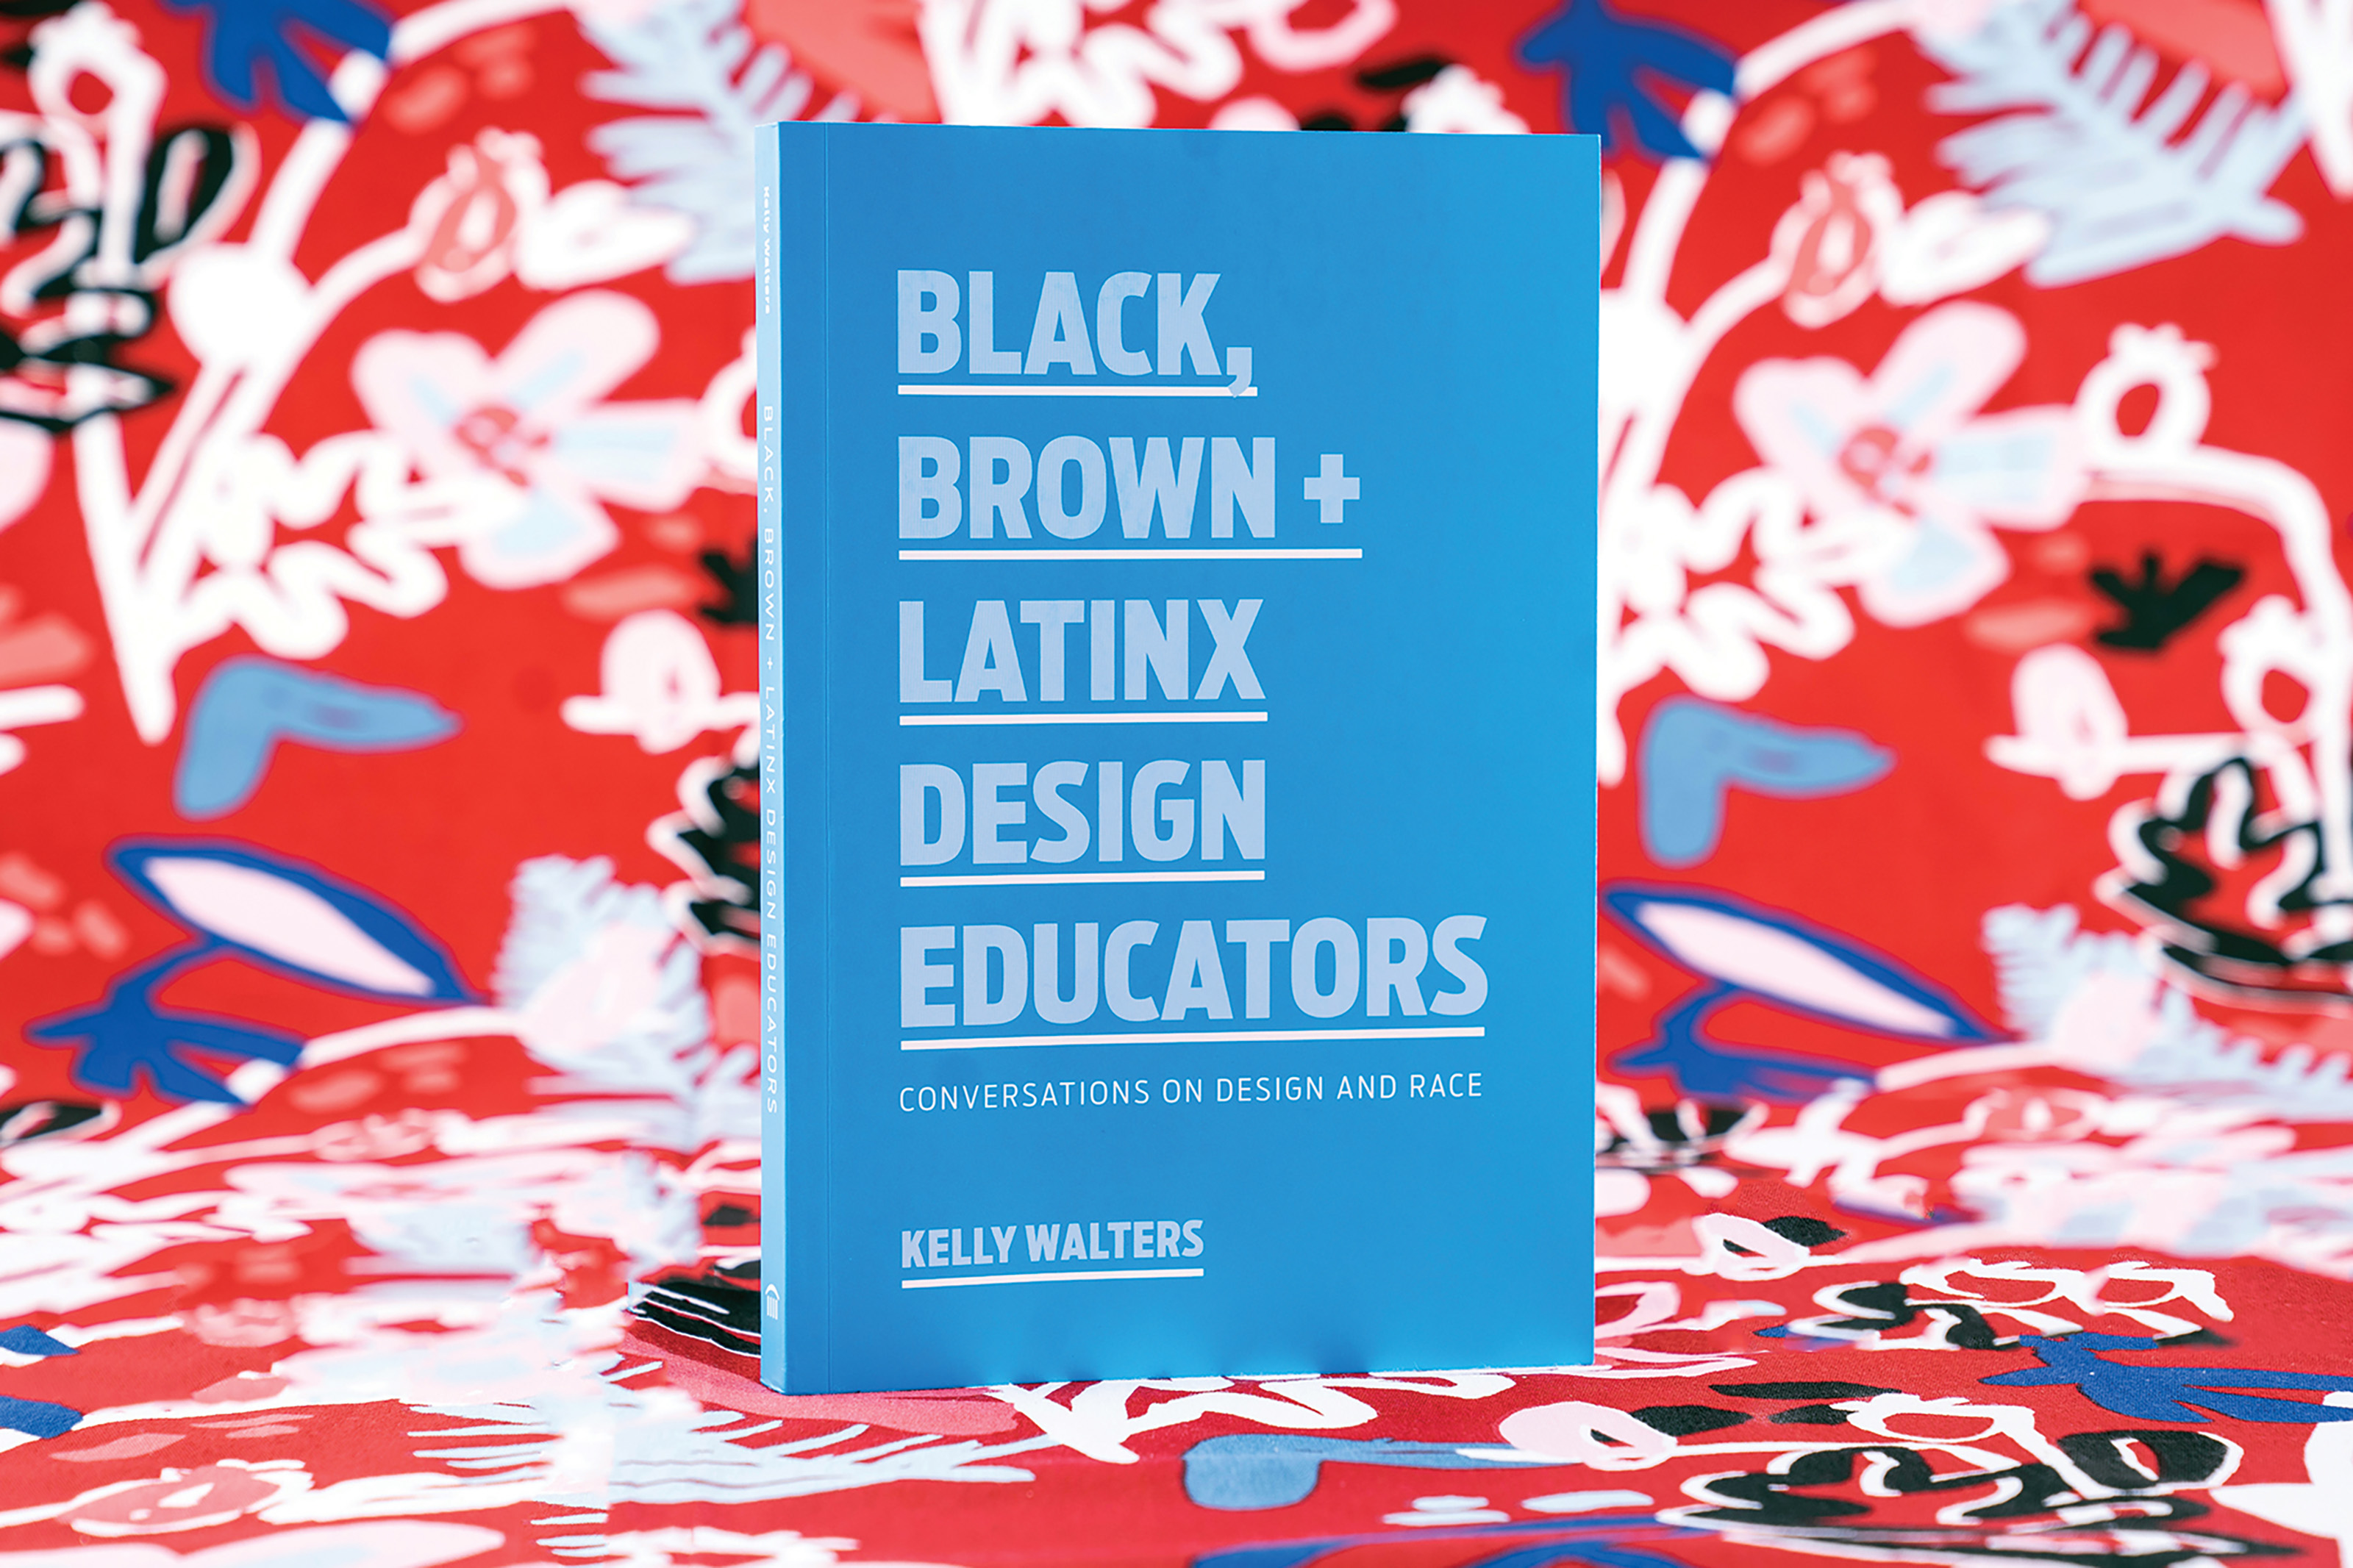 Kelly Walters book, Black, Brown + Latinx Design Educators: Conversations on Design and Race